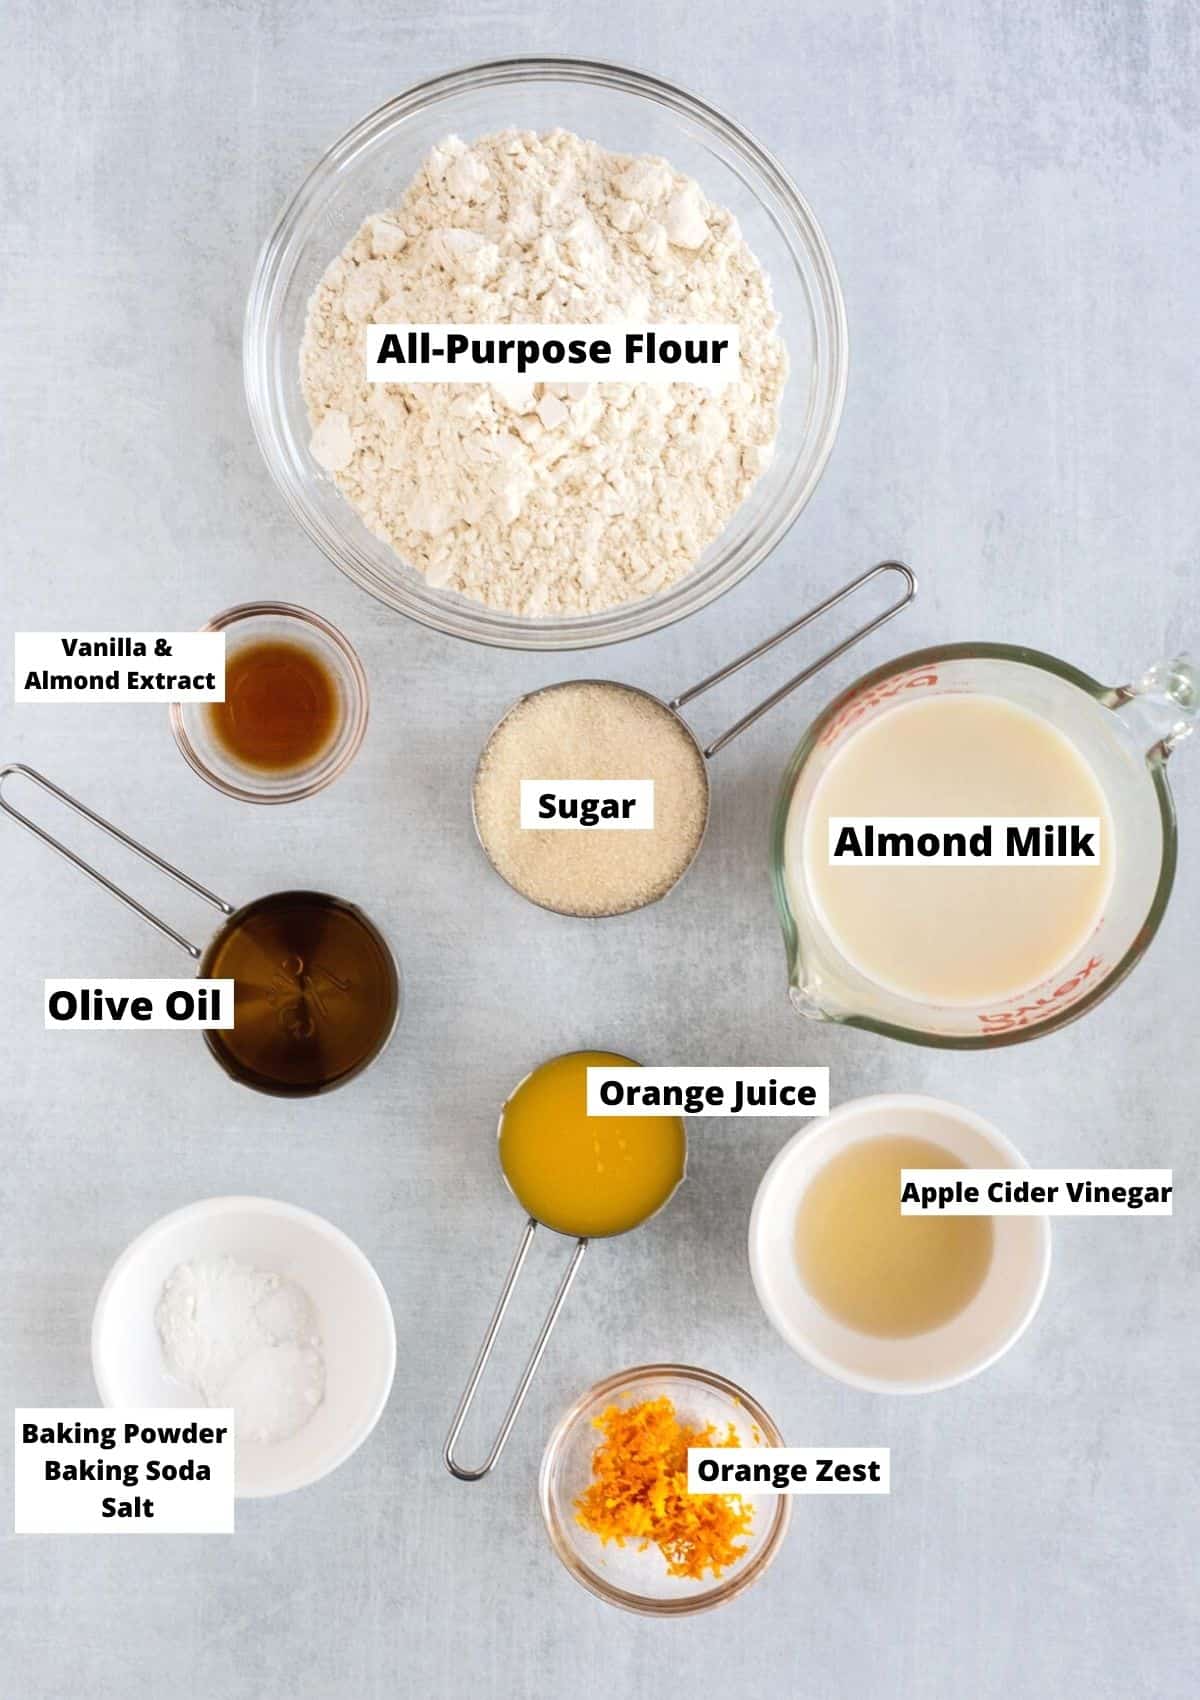 Ingredients for eggless orange cake: all-purpose flour, almond extract, vanilla extract, sugar, almond milk, olive oil, orange juice, sugar, apple cider vinegar, orange zest, baking powder, baking soda, salt. 